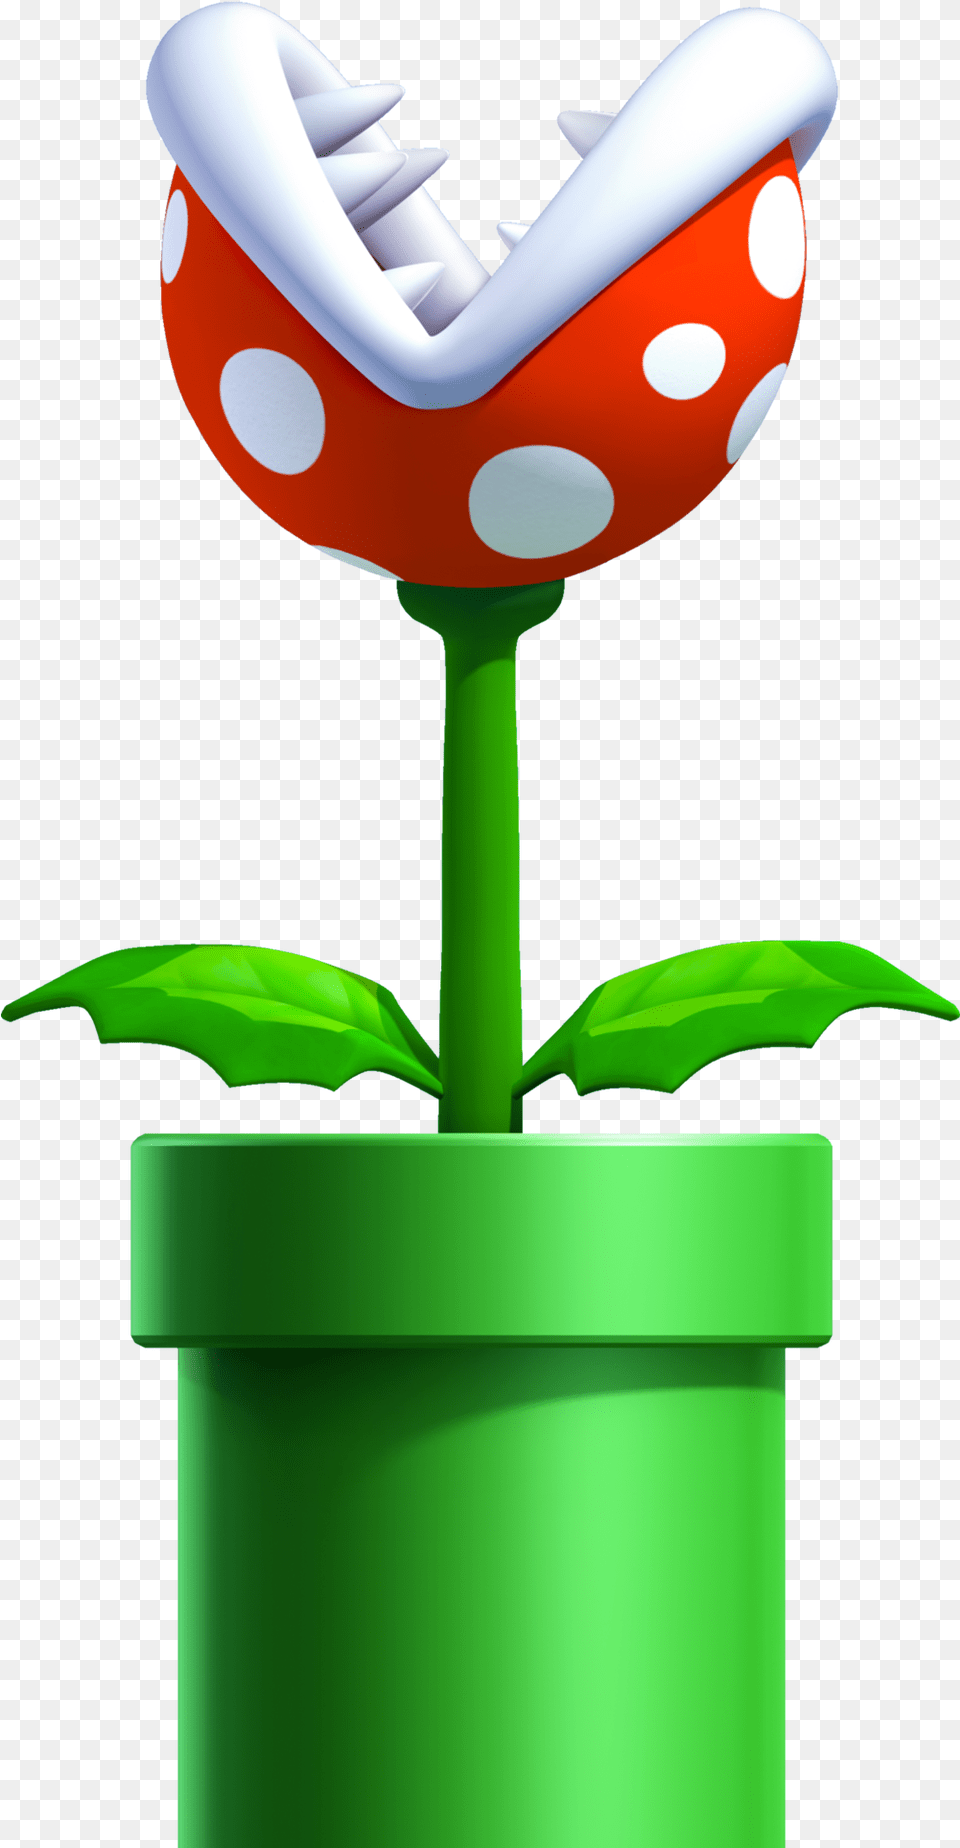 Super Mario Piranha Plant, Green, Jar, Planter, Potted Plant Png Image